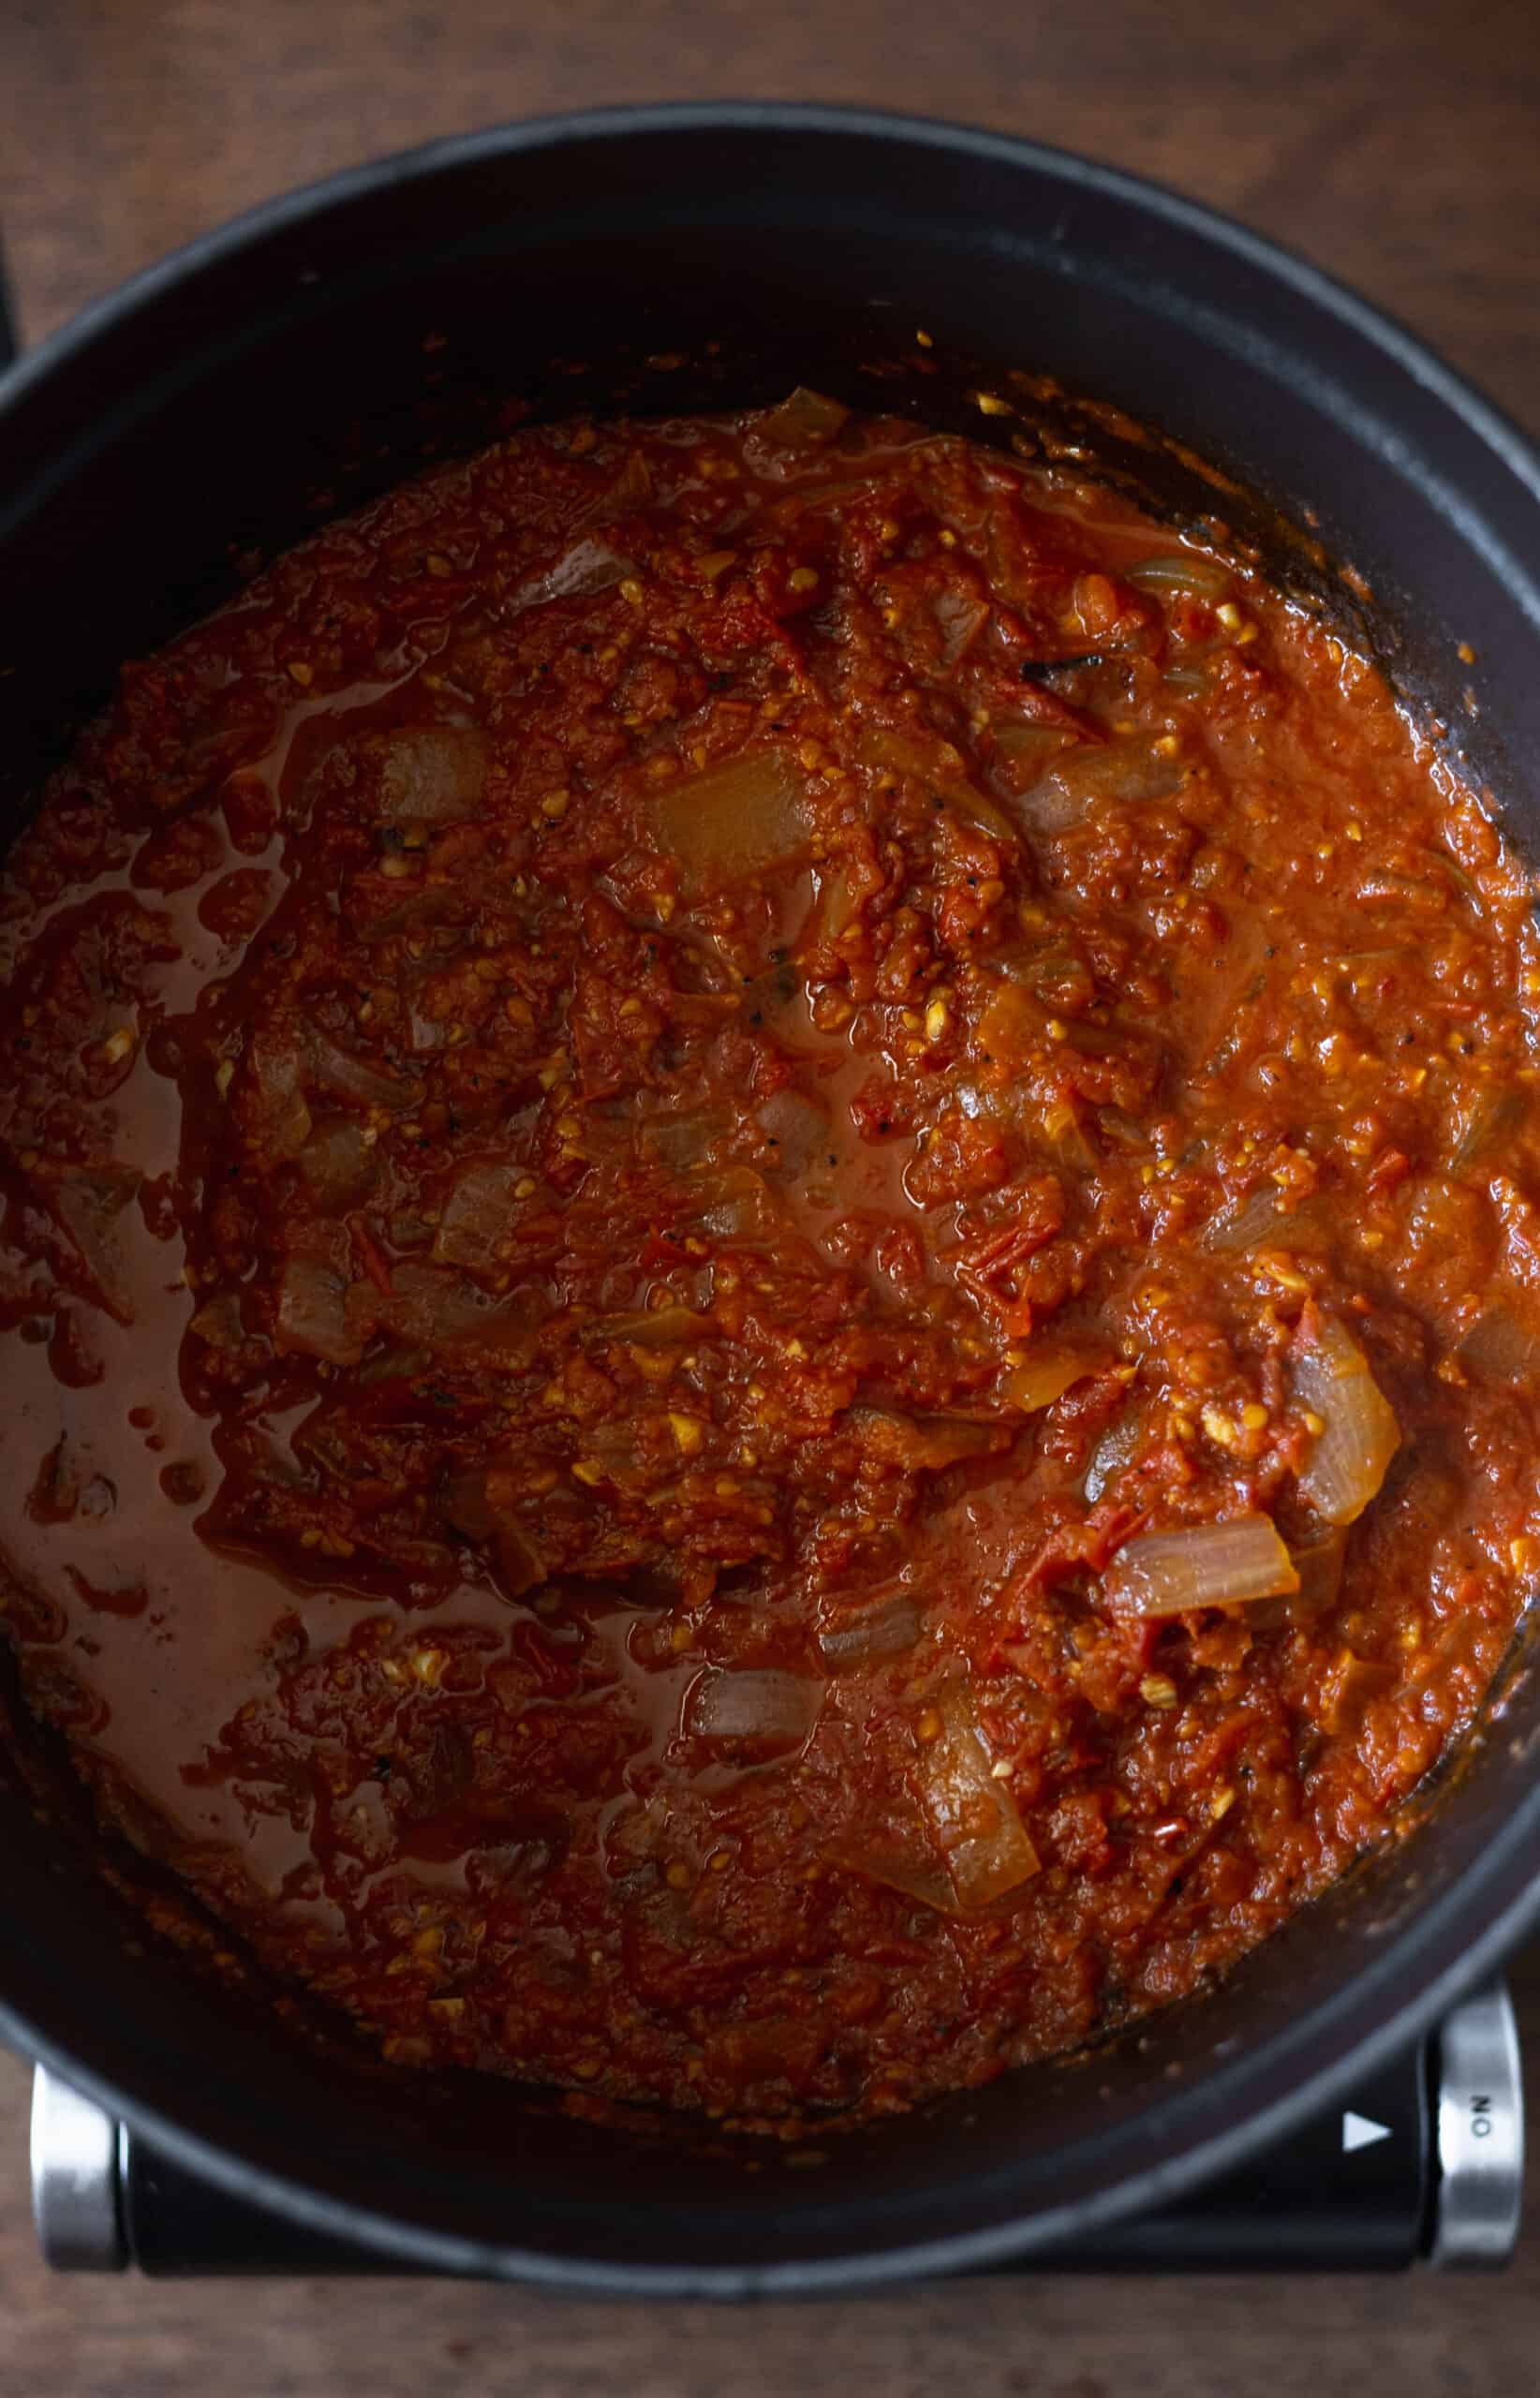 Reduced tomato puree in homemade pasta sauce